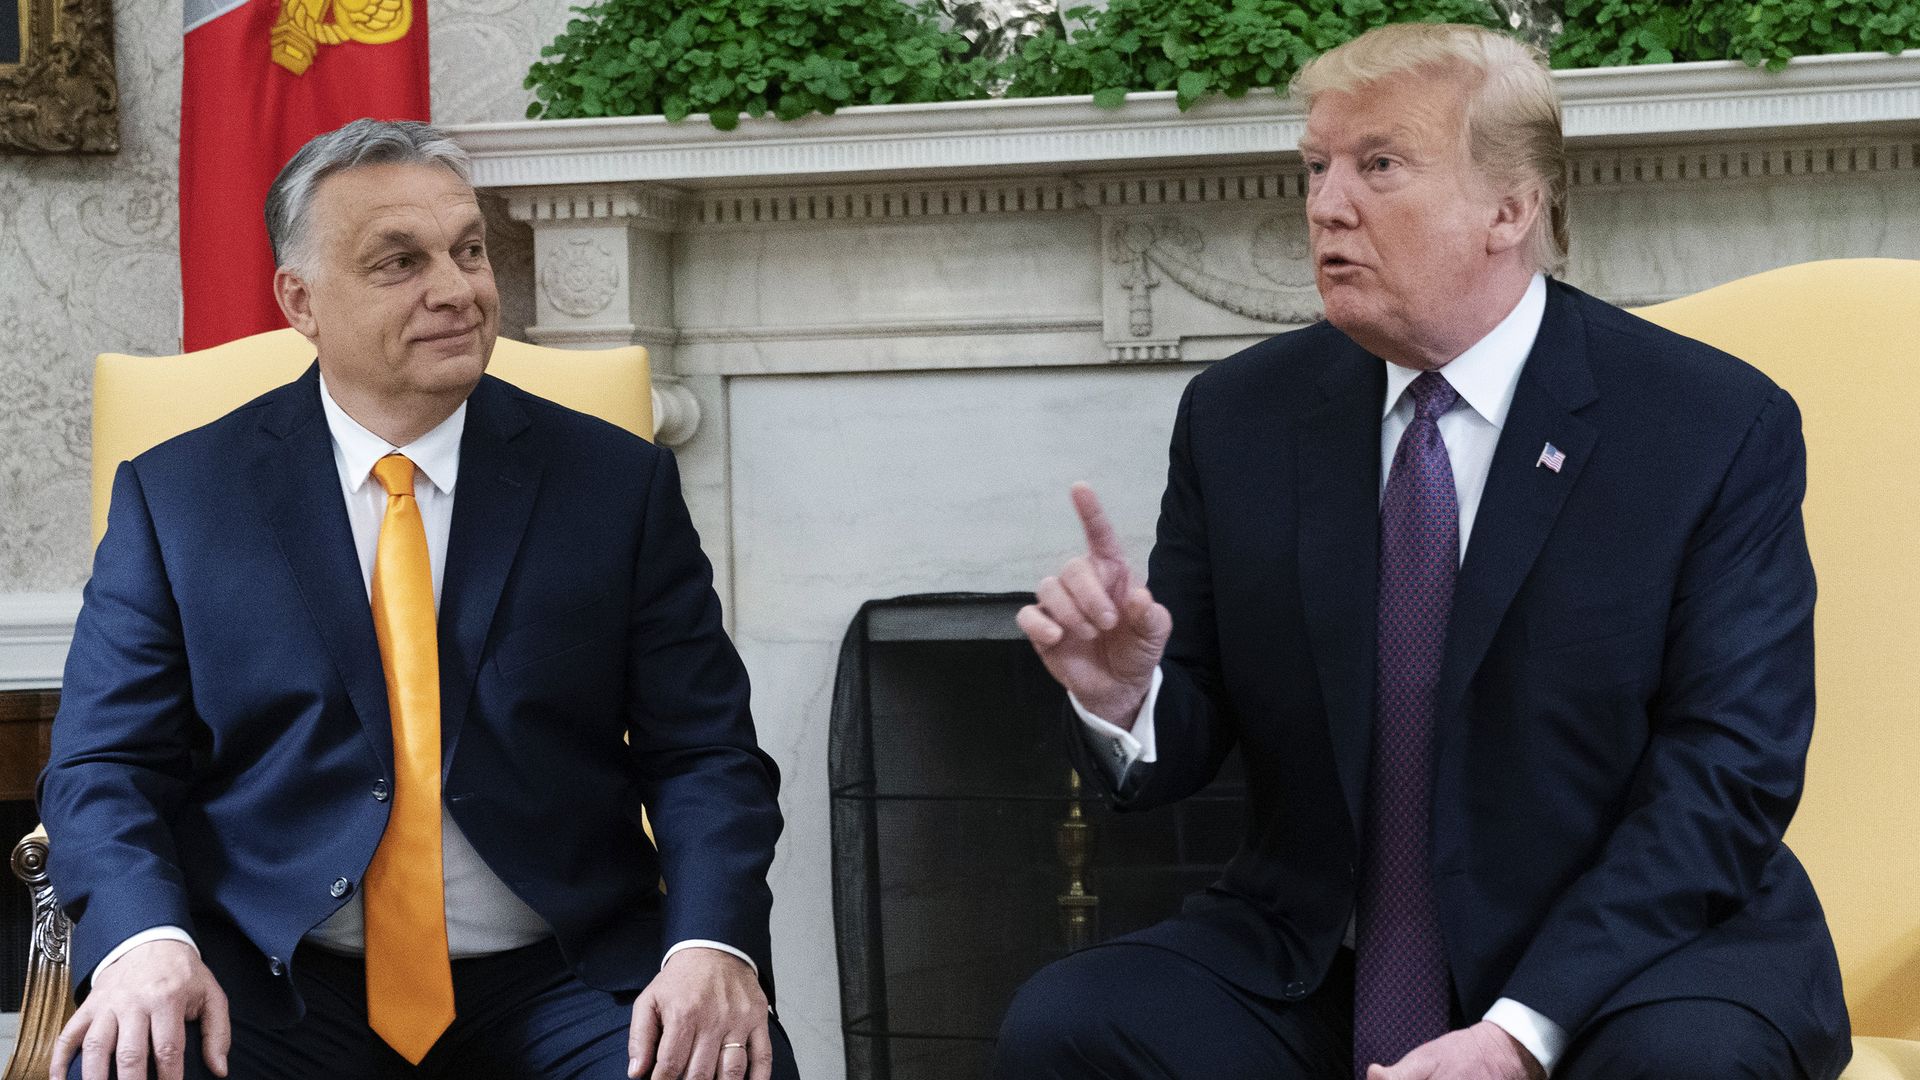 Viktor Orban and Donald Trump